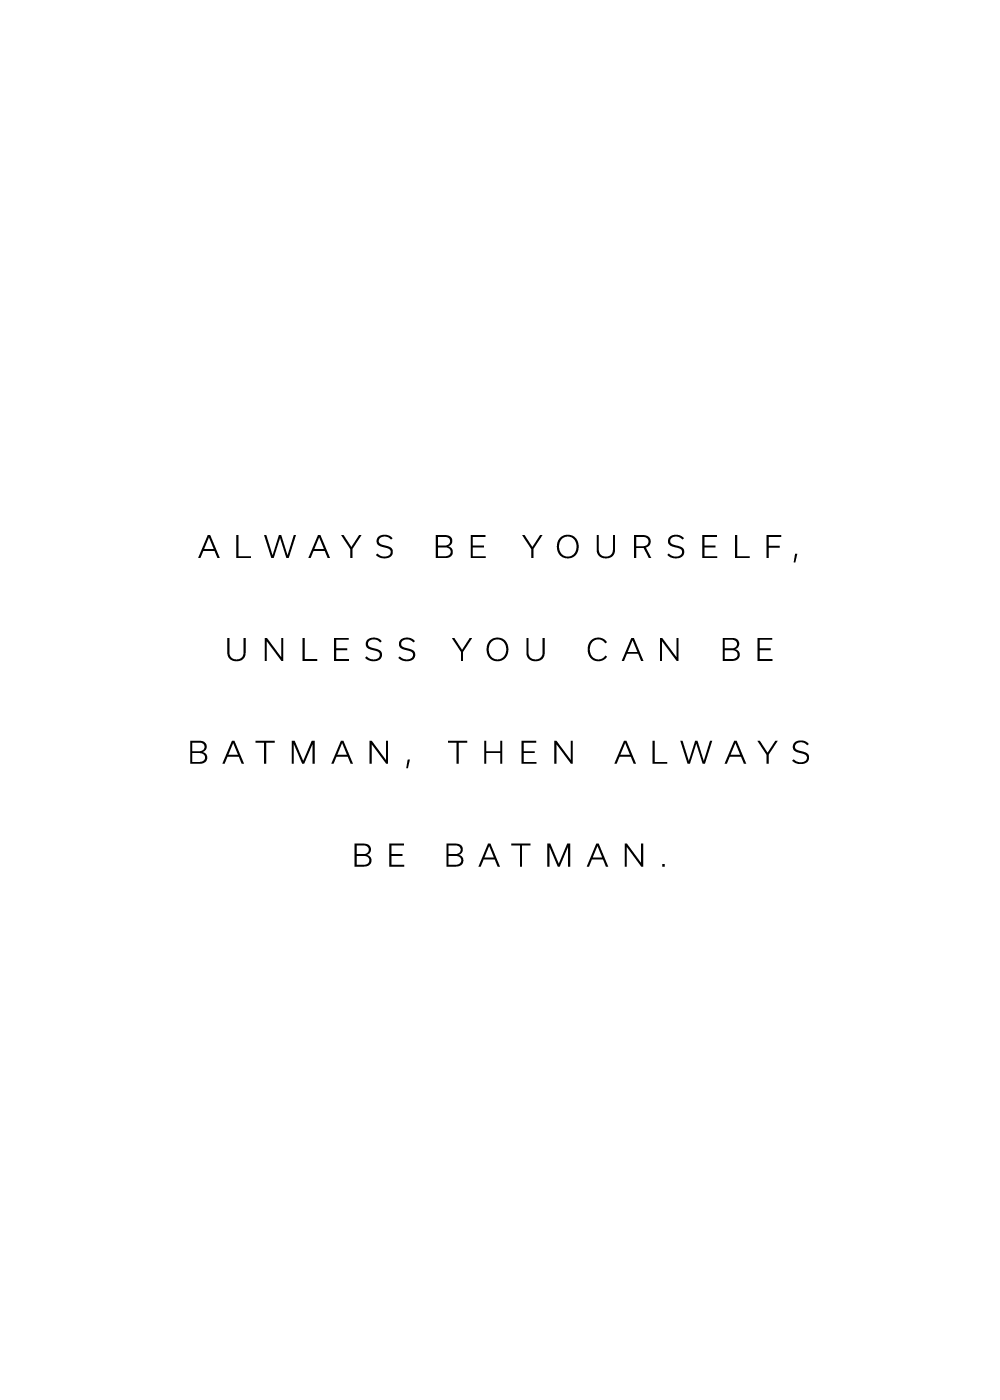 Billede af "Always be yourself, unless you can be batman, then always be batman" citatplakat